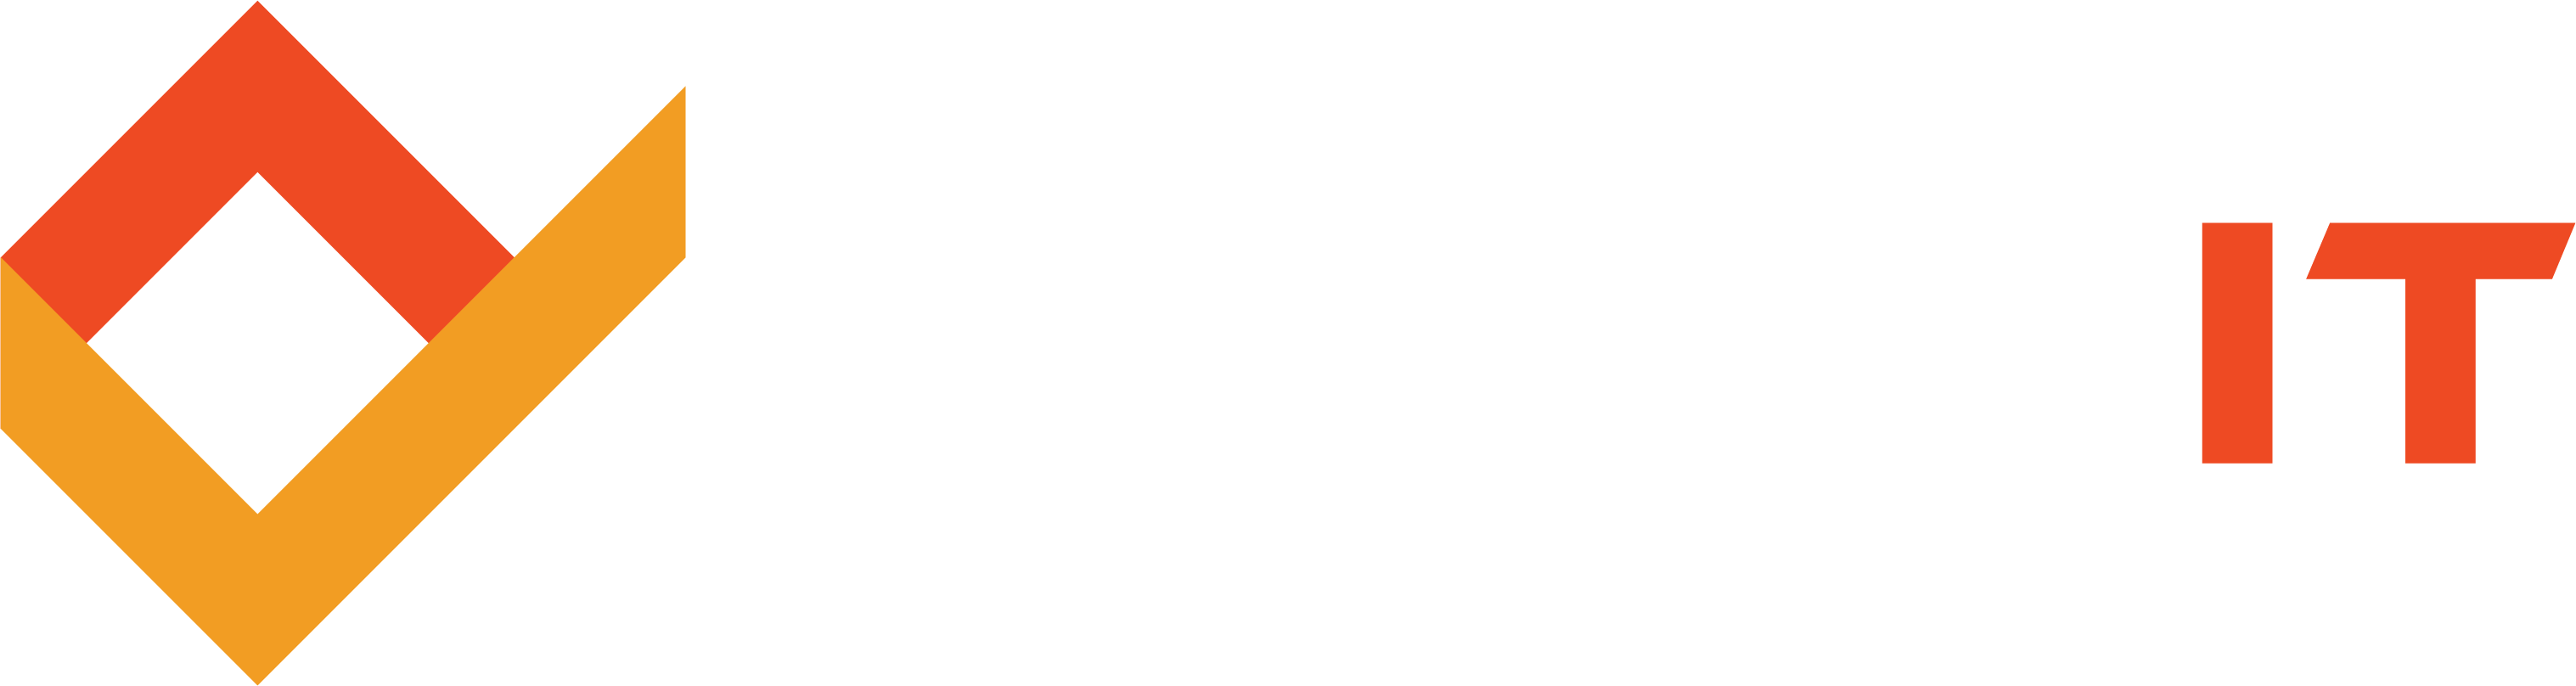 Definit_Logo_Reverse